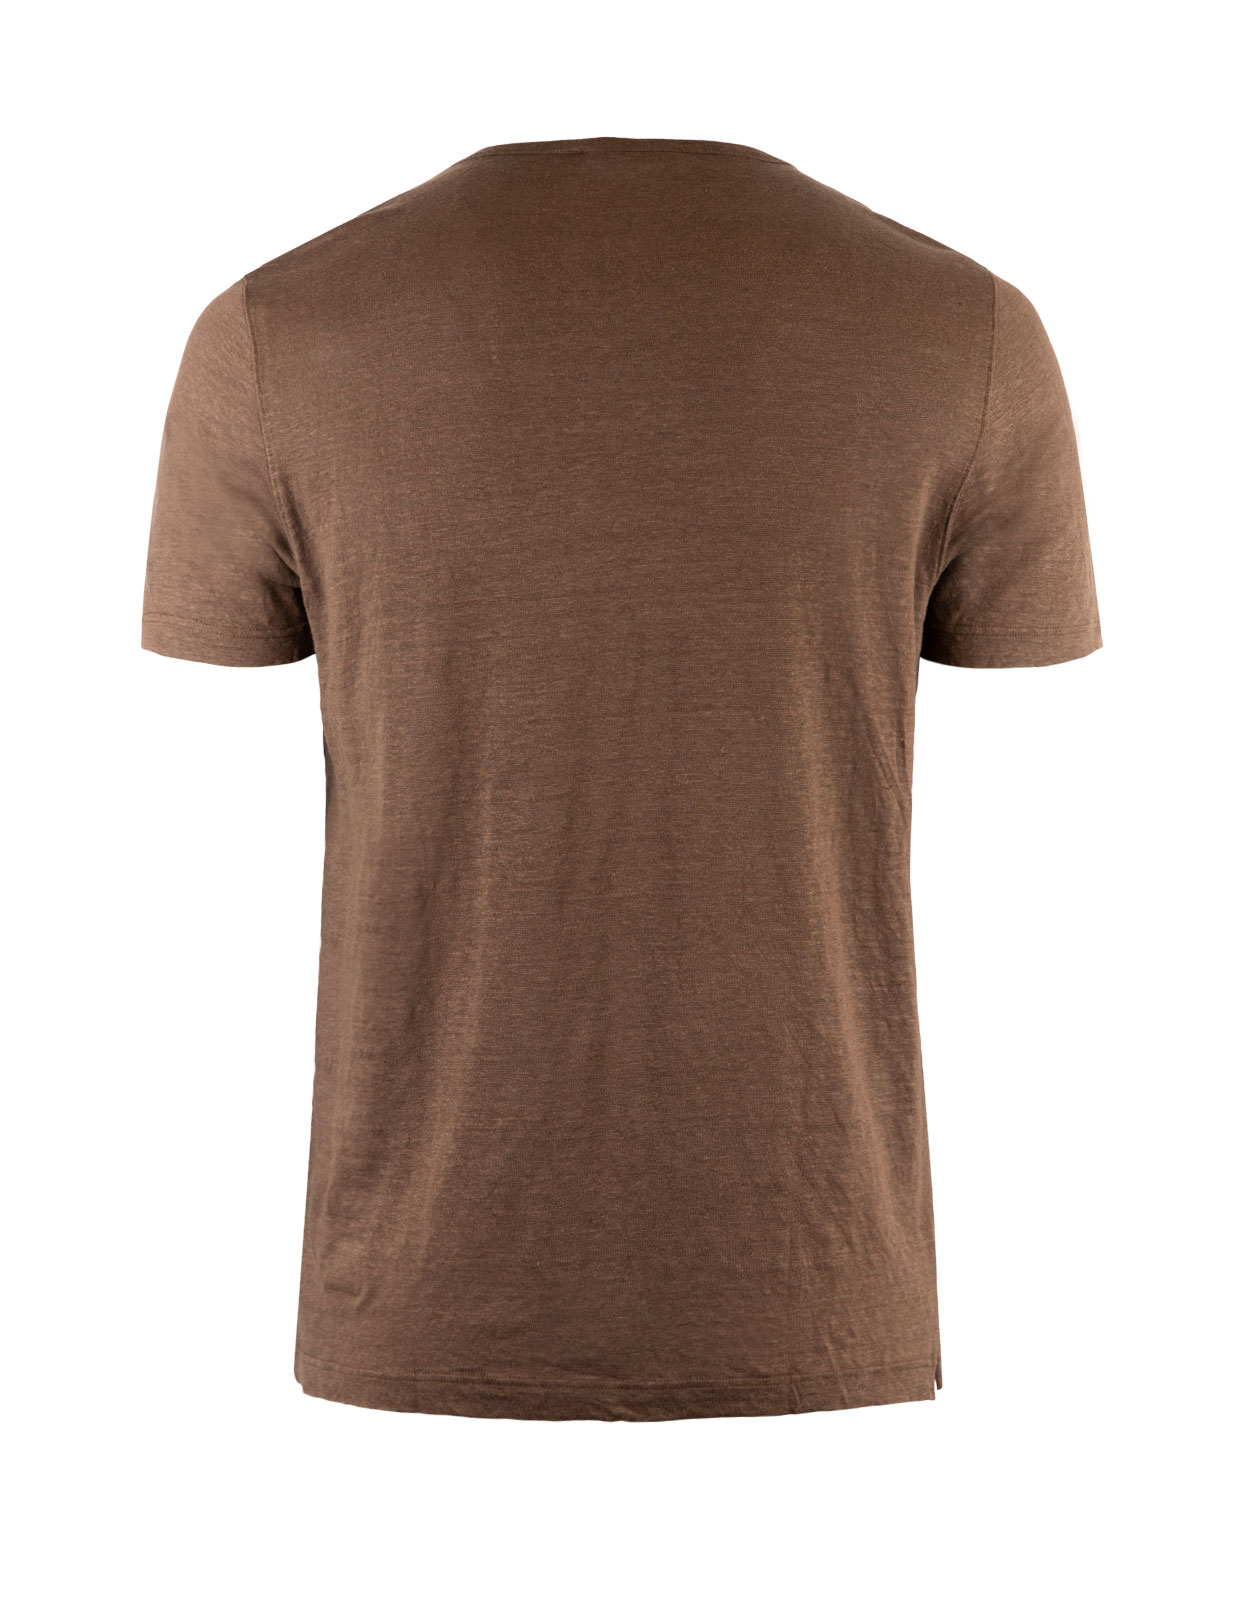 Vintage Linen T-Shirt Brown